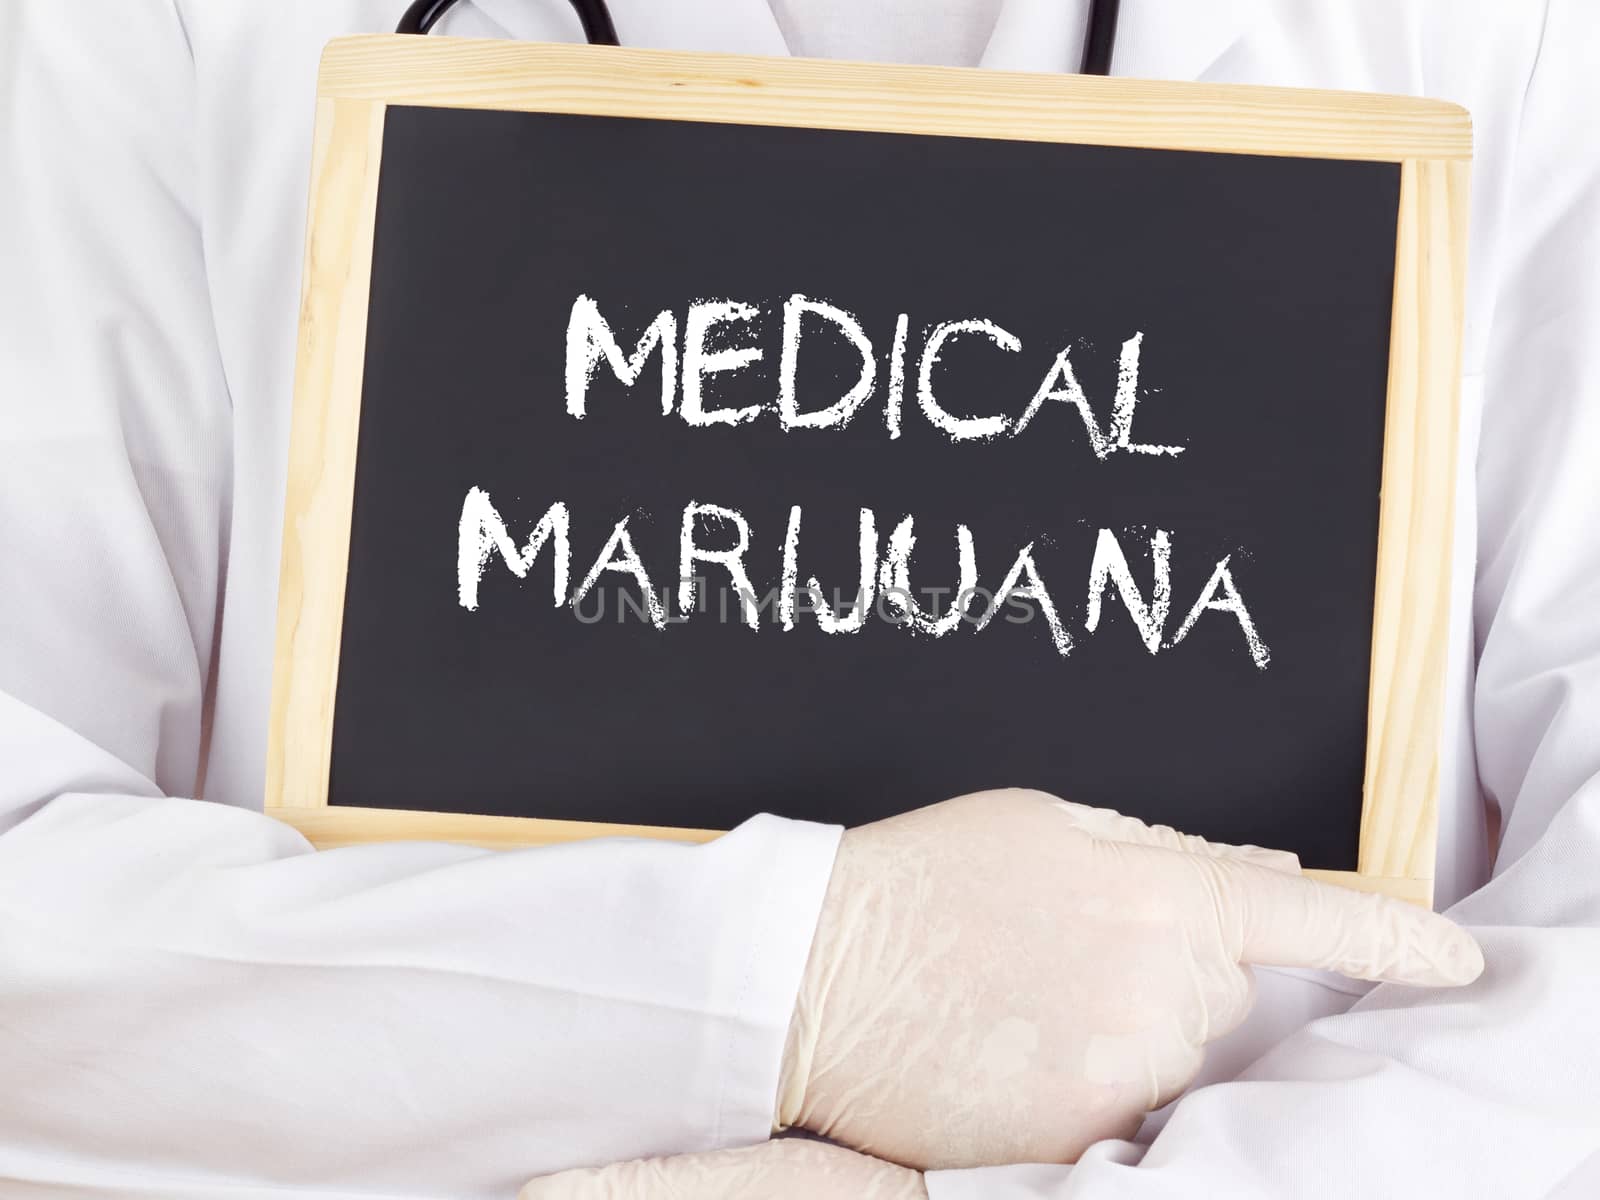 Doctor shows information on blackboard: medical marijuana